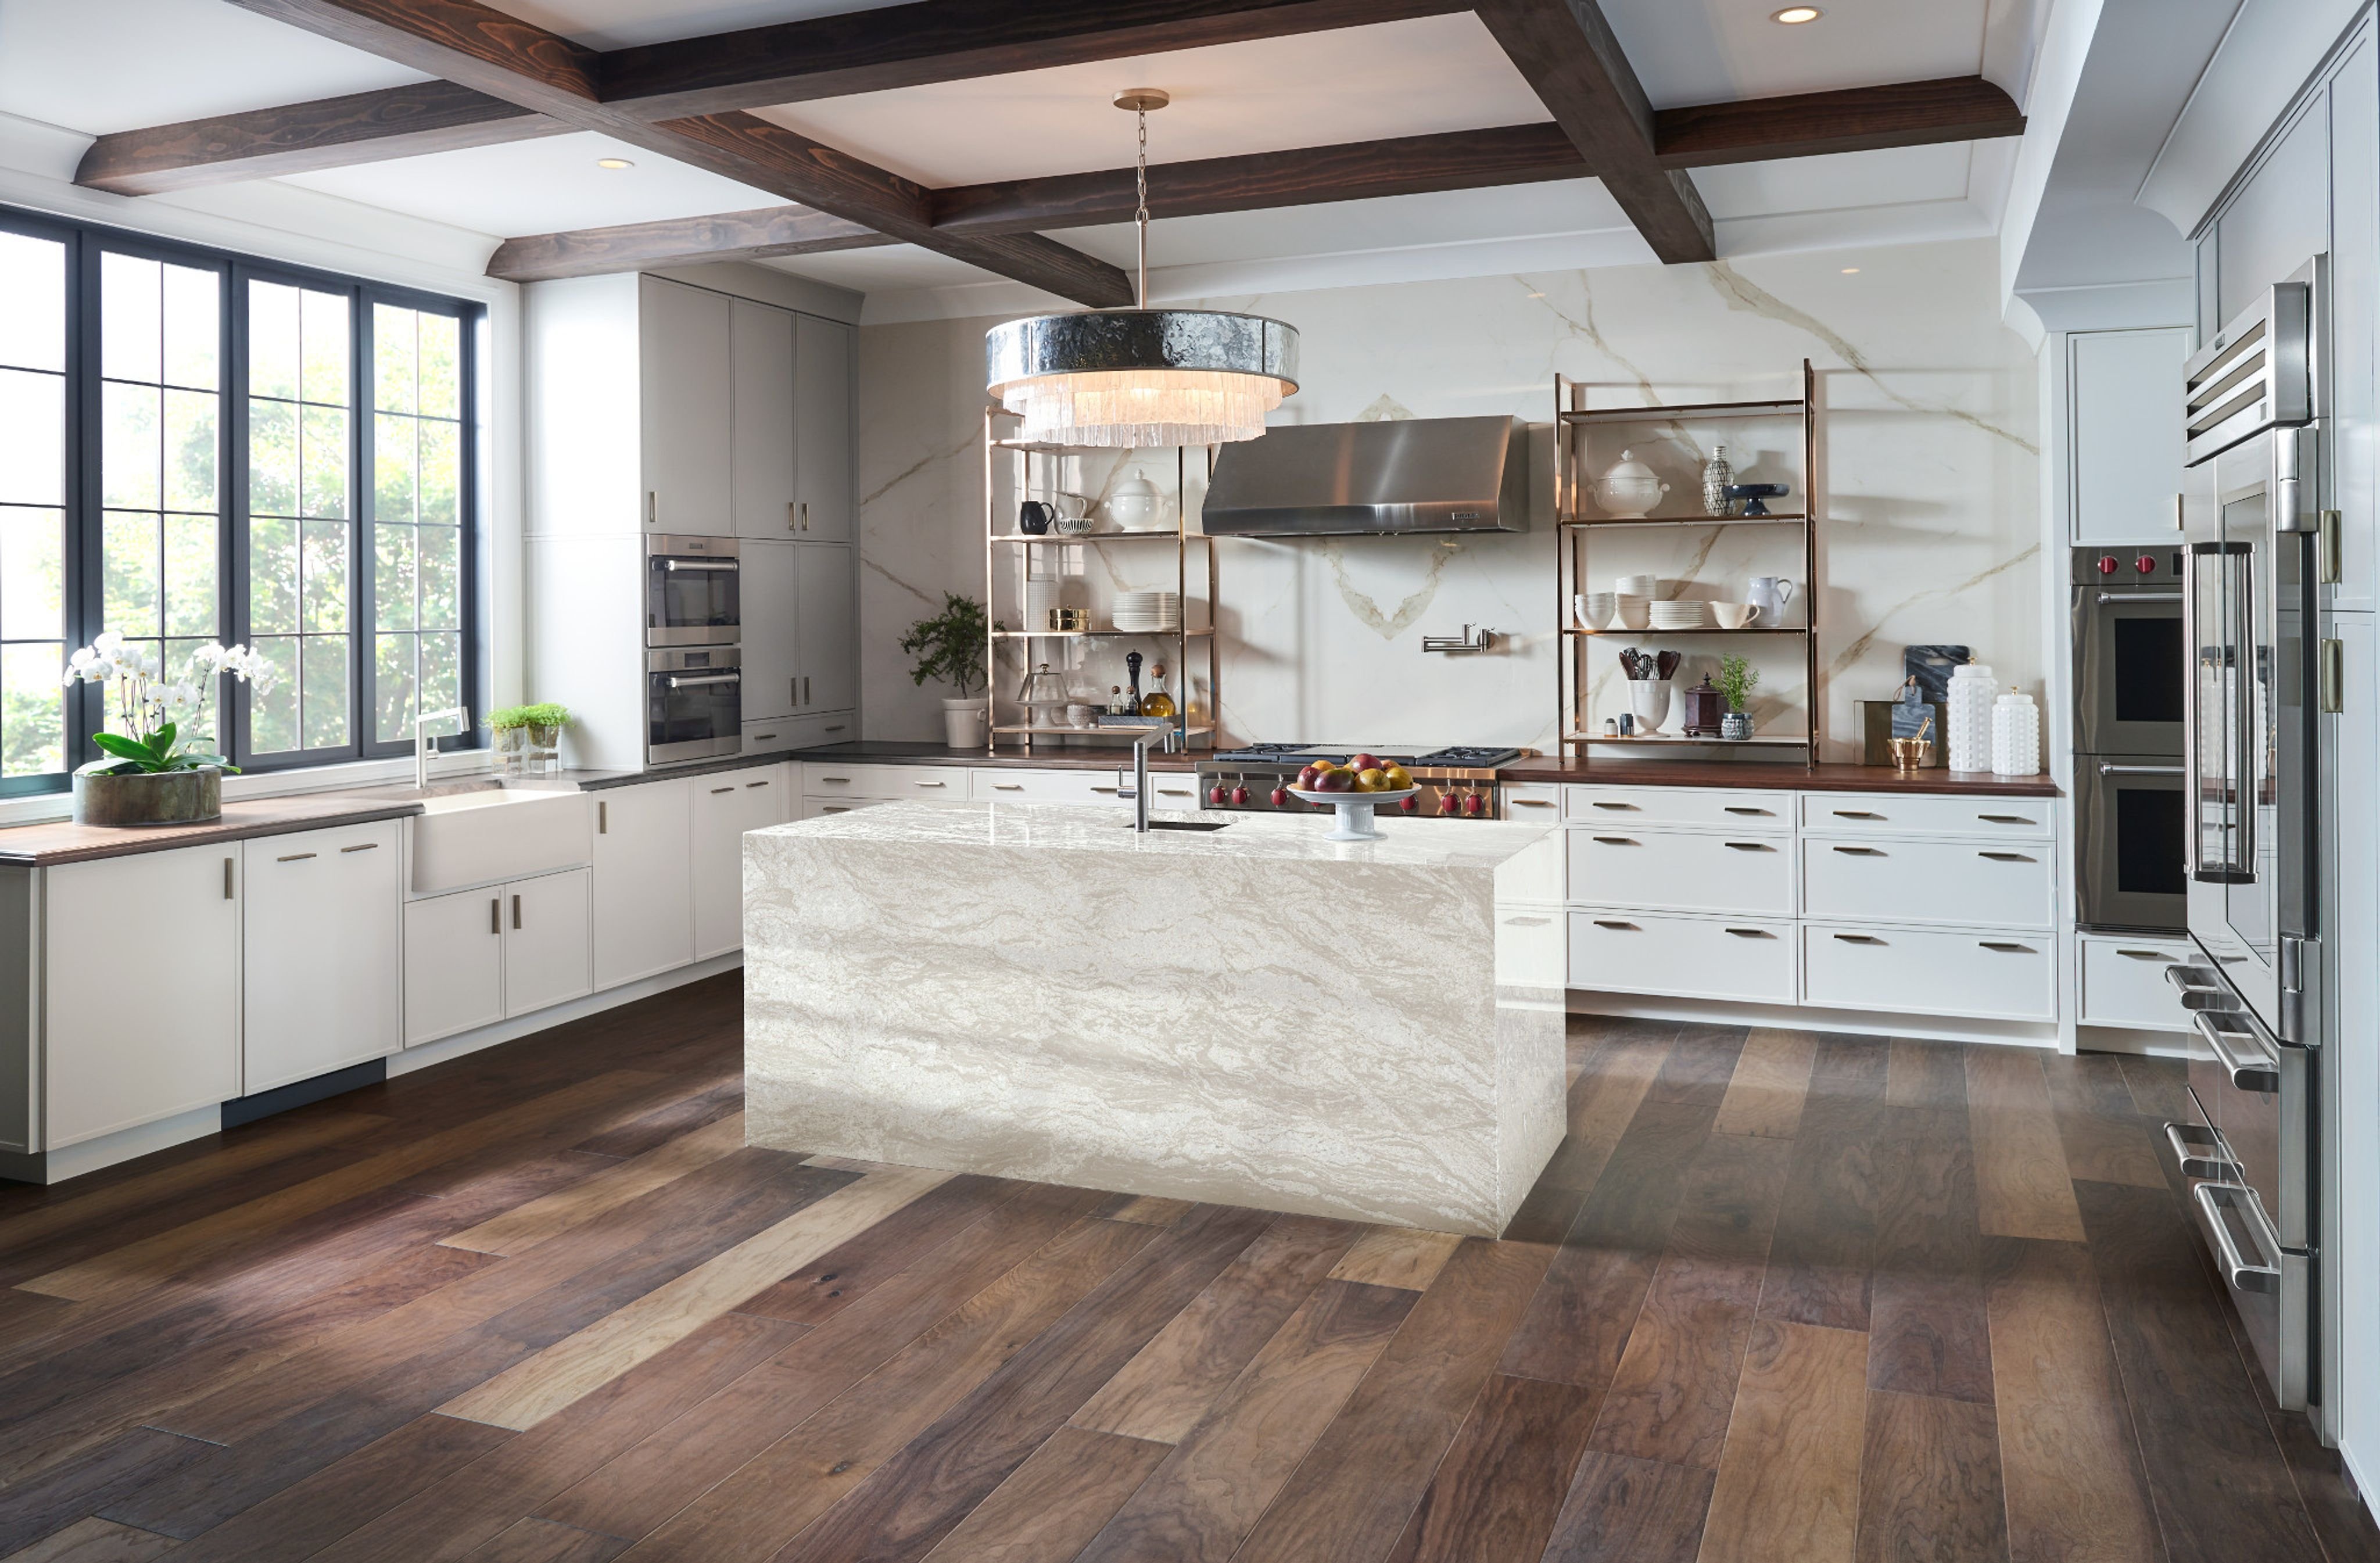 Kitchen with hardwood flooring from Northcraft Flooring & Design in Raytown, MO